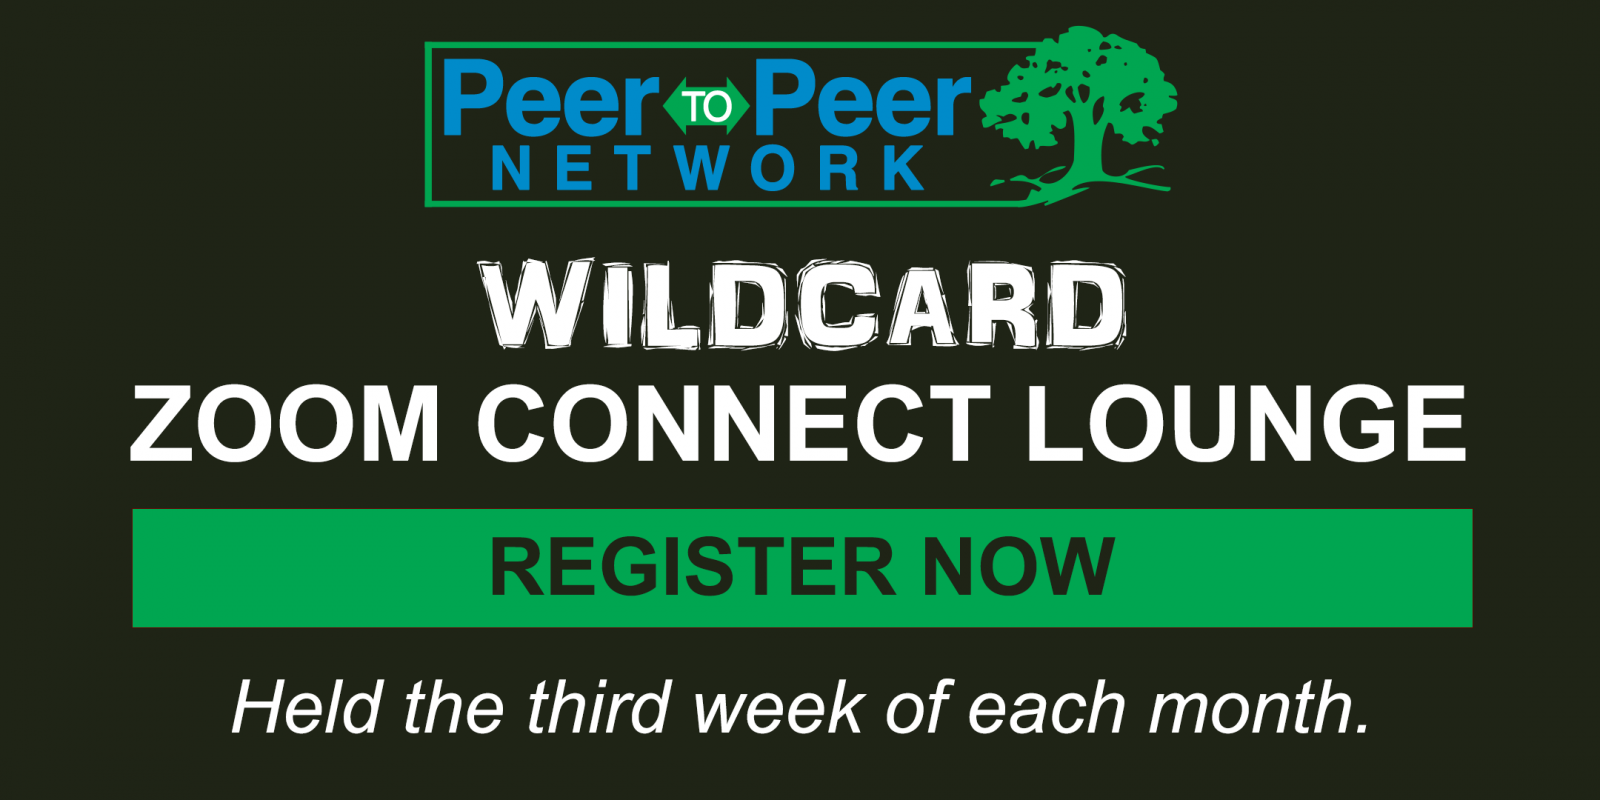 LO Peer to Peer Network Wildcard Zoom Connect Lounge